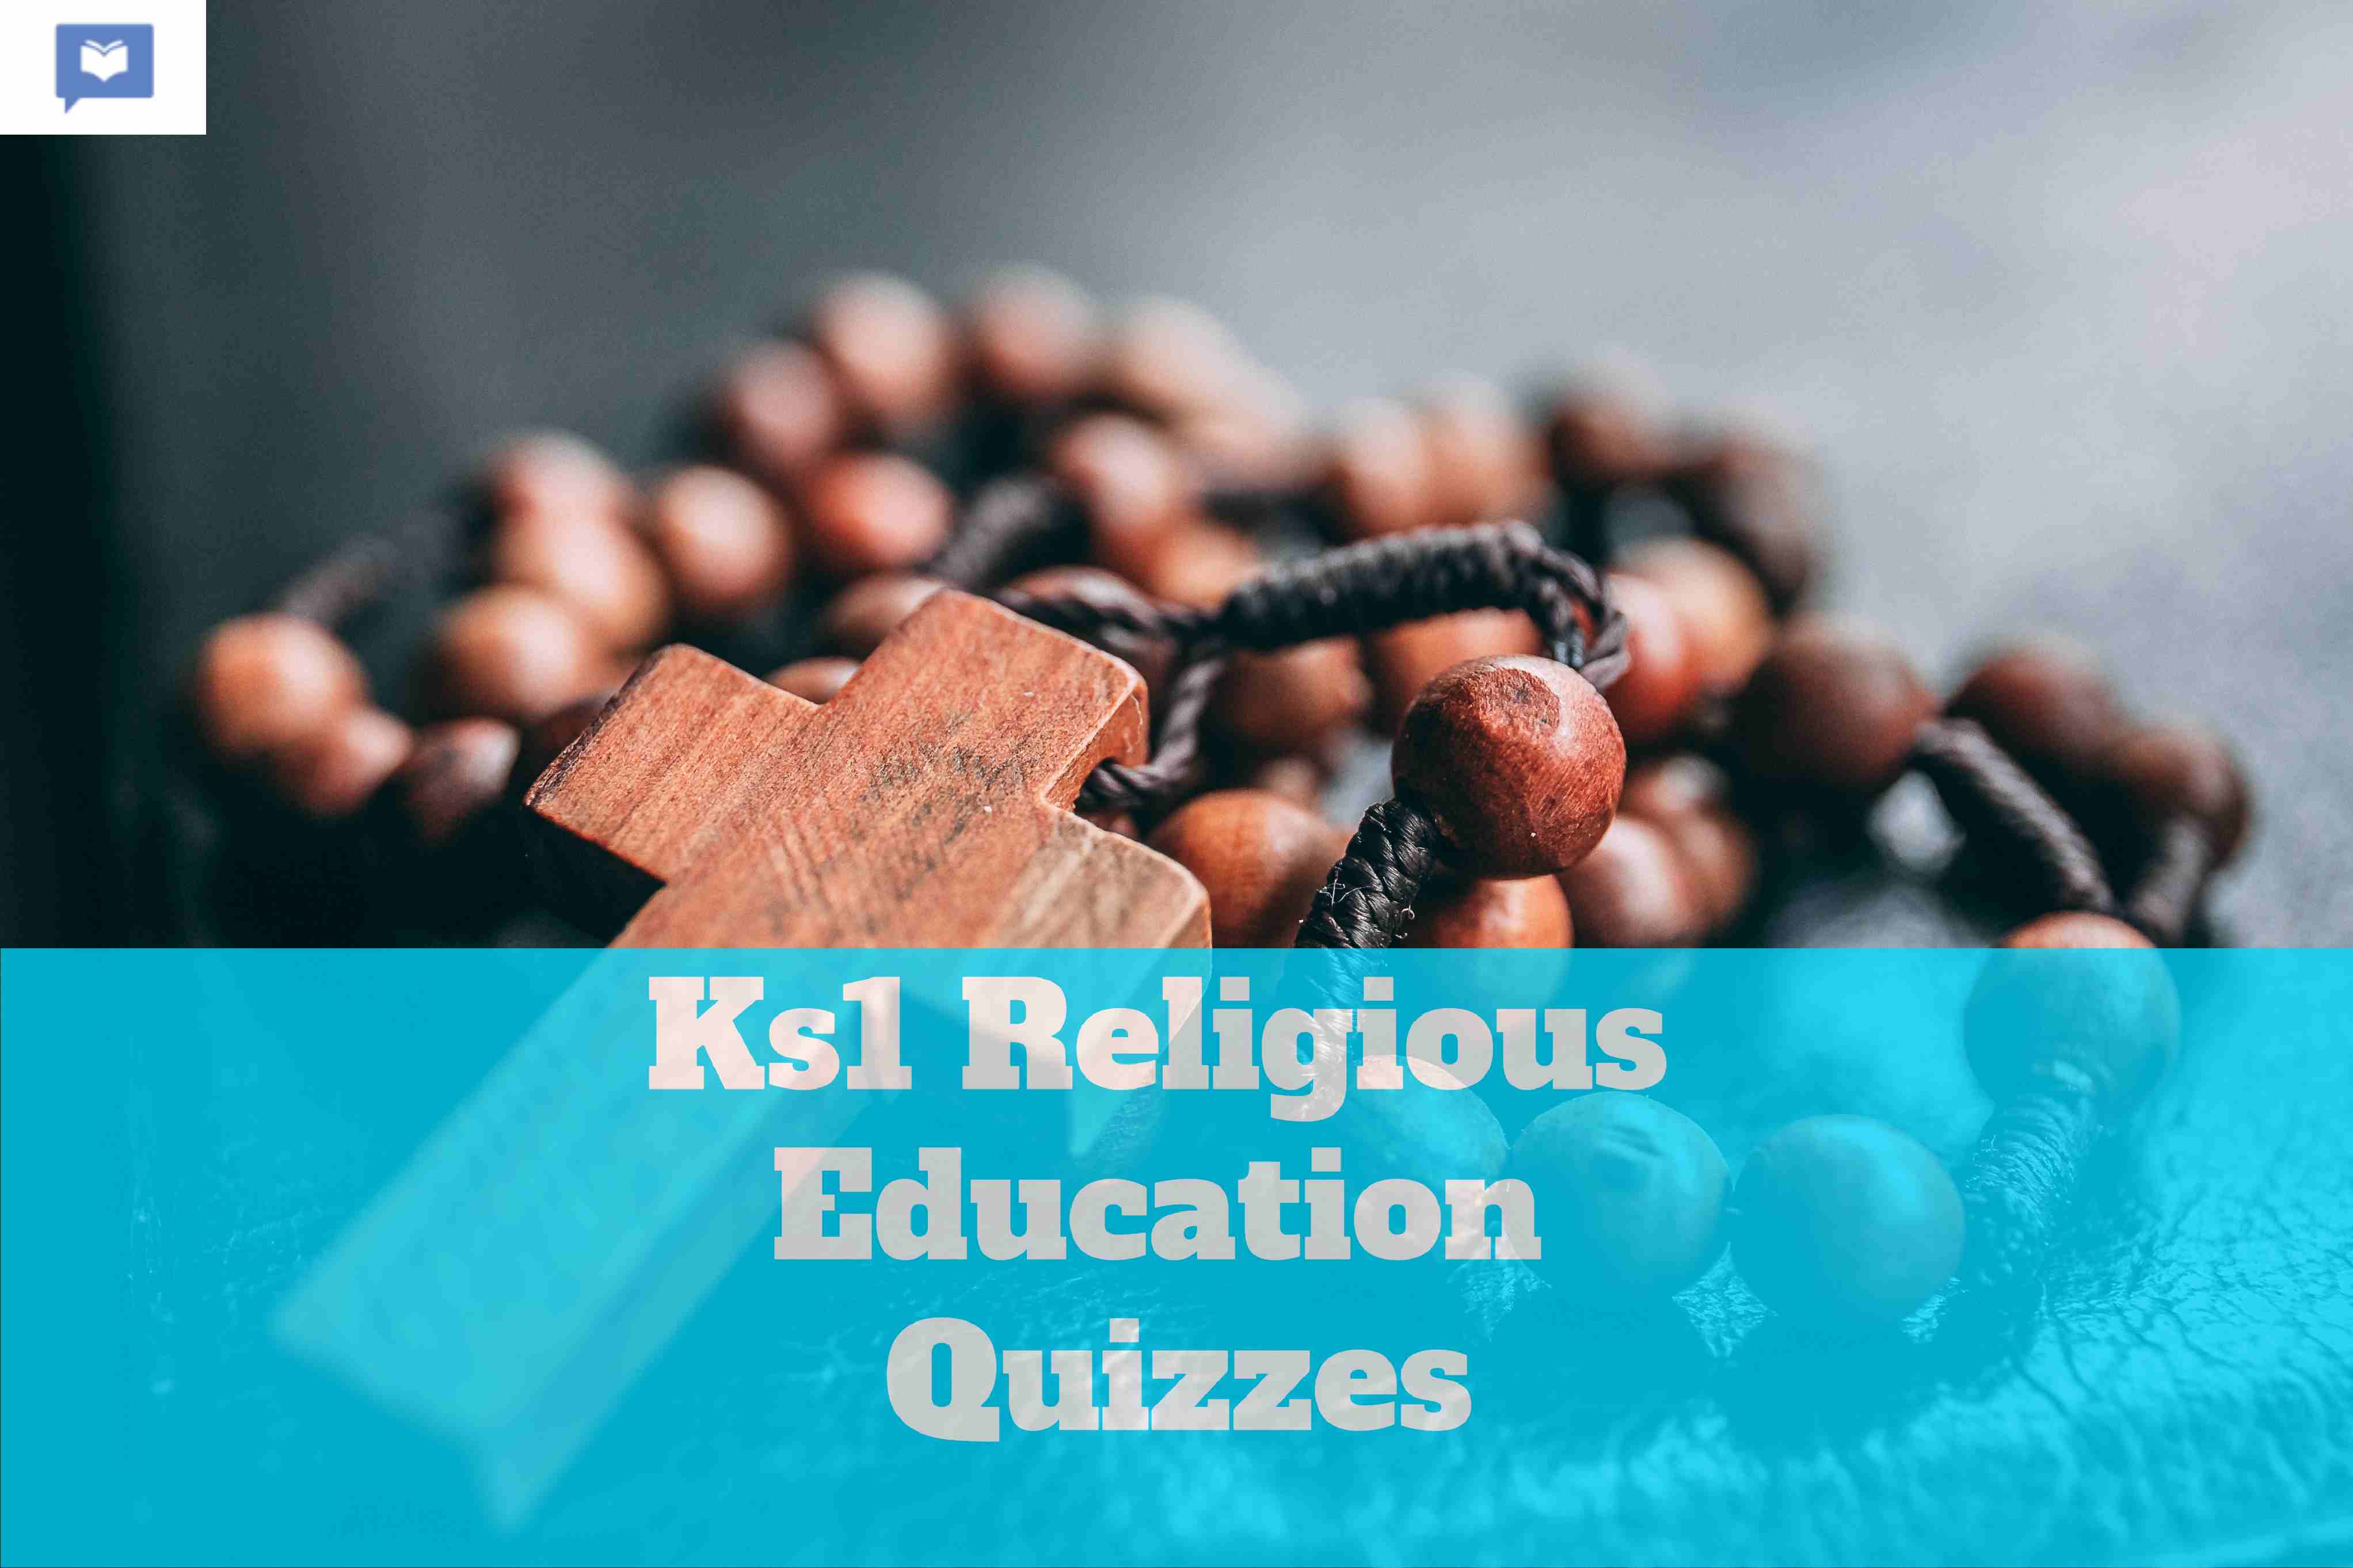  Ks1 Religious Education Quizzes